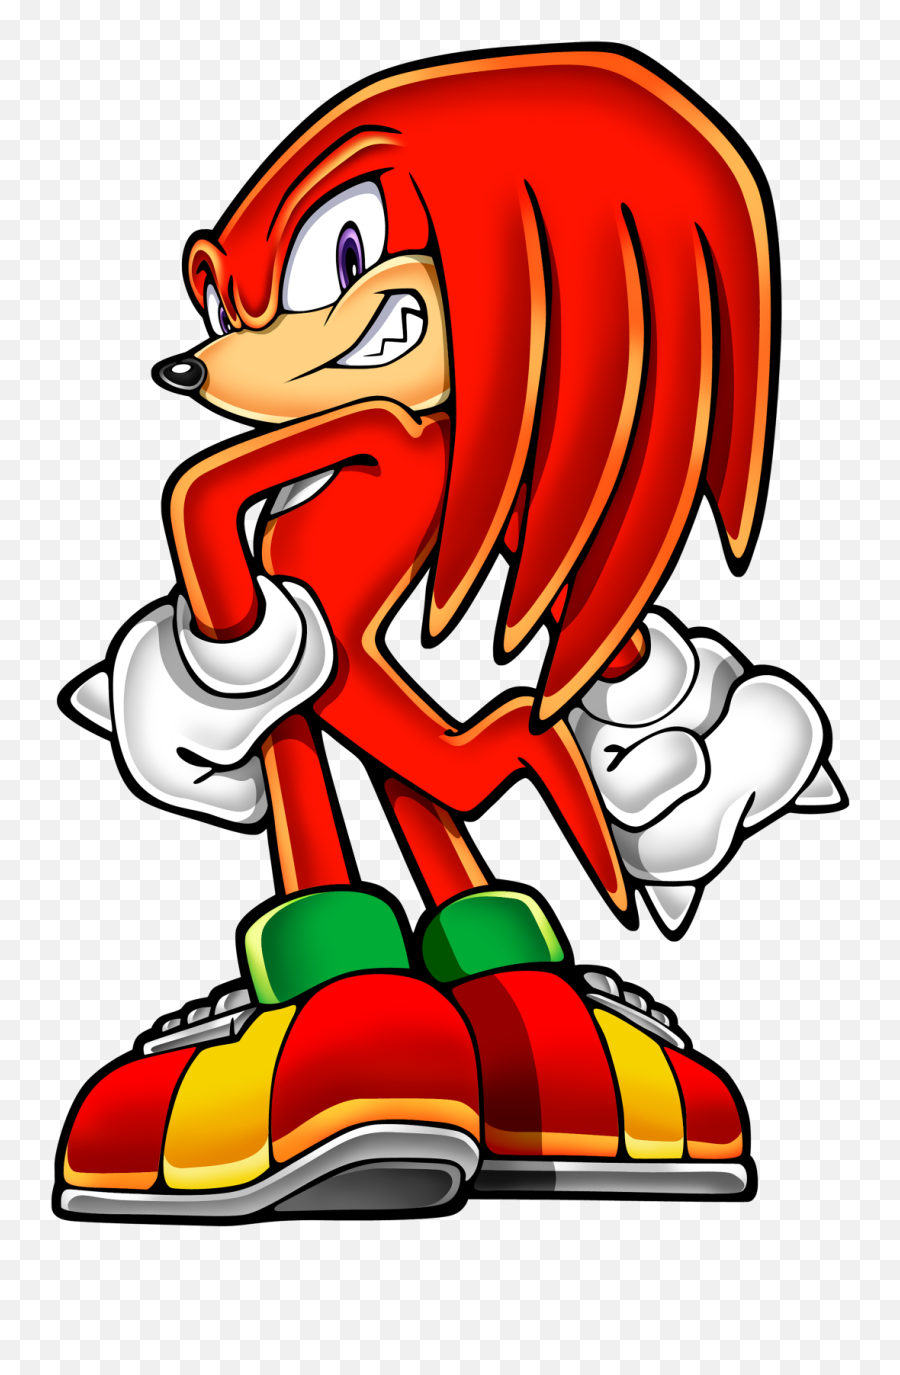 Png Images Saga Game Games Cartoon Sonic